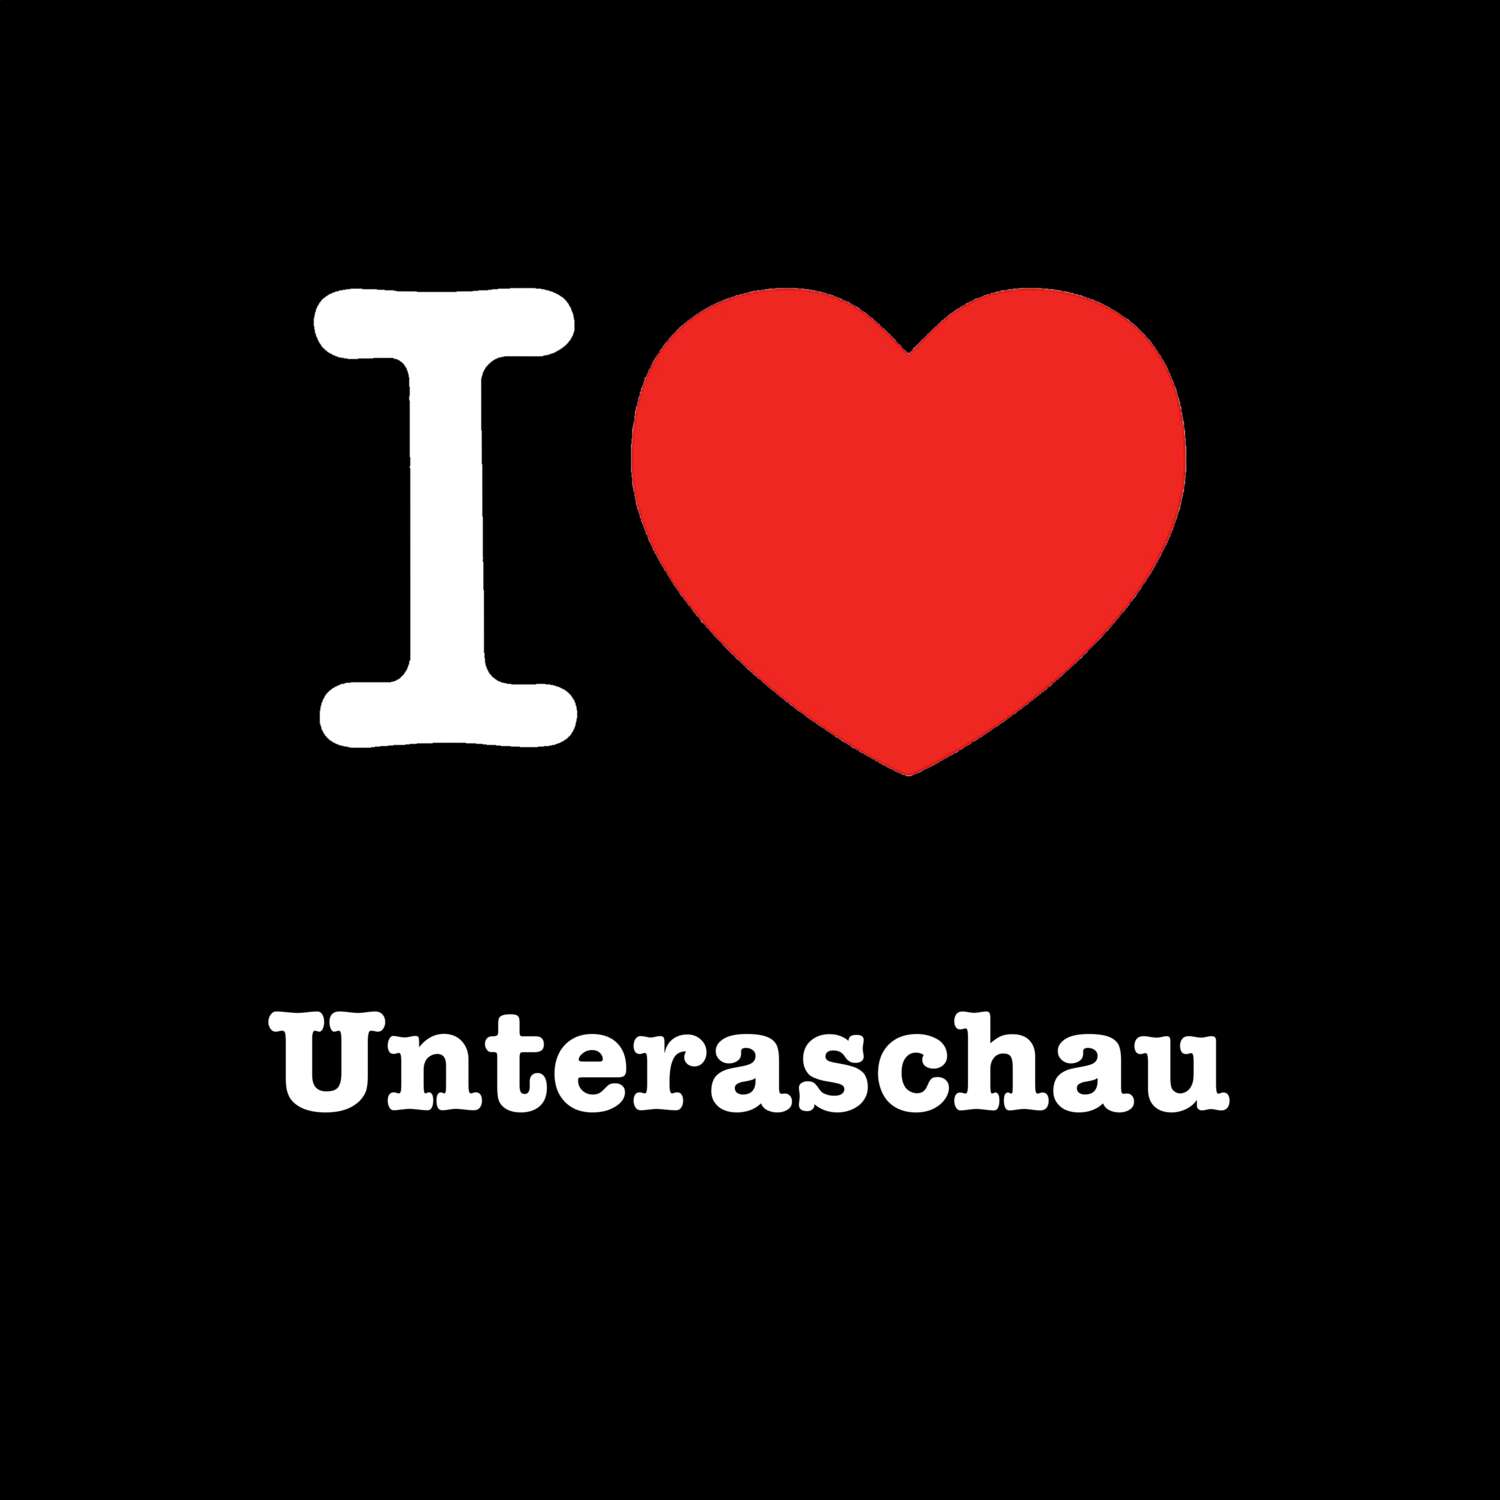 Unteraschau T-Shirt »I love«